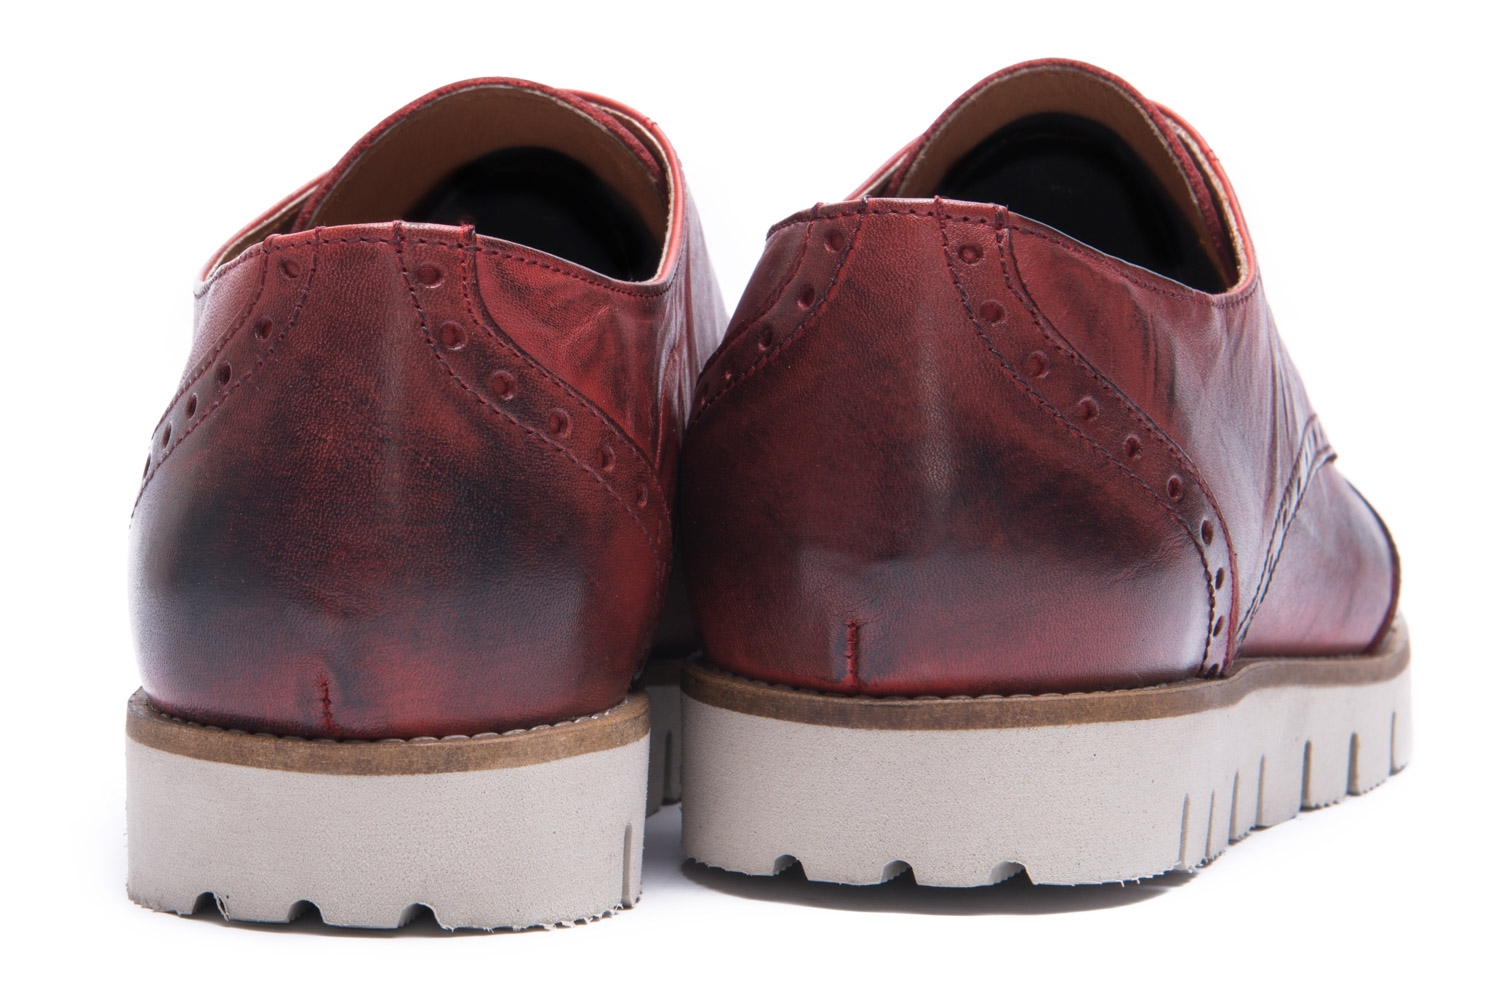 Pantofi rosii piele naturala 2